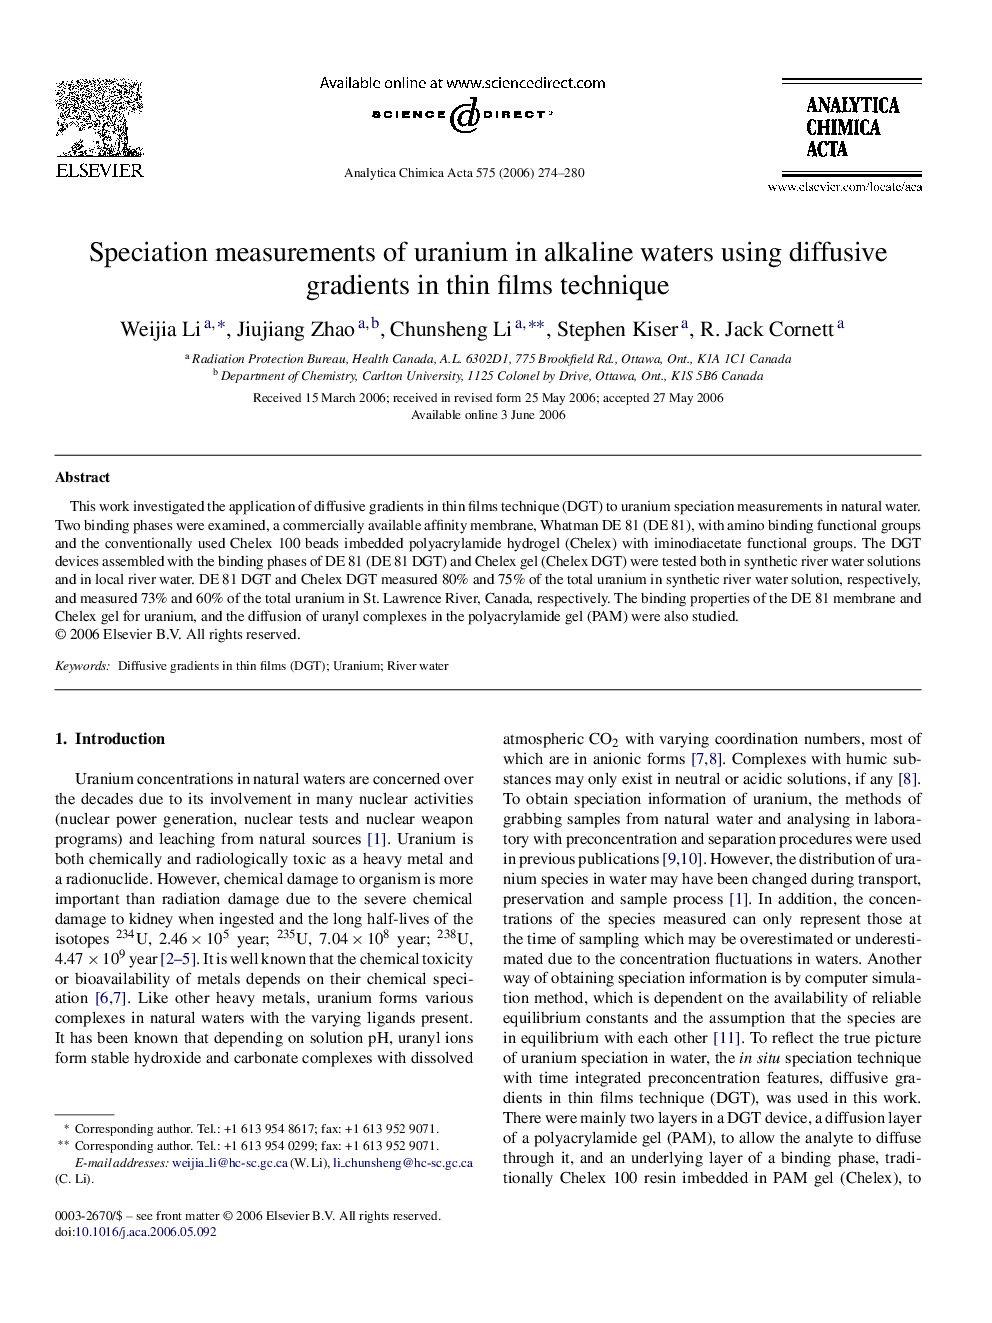 Speciation measurements of uranium in alkaline waters using diffusive gradients in thin films technique